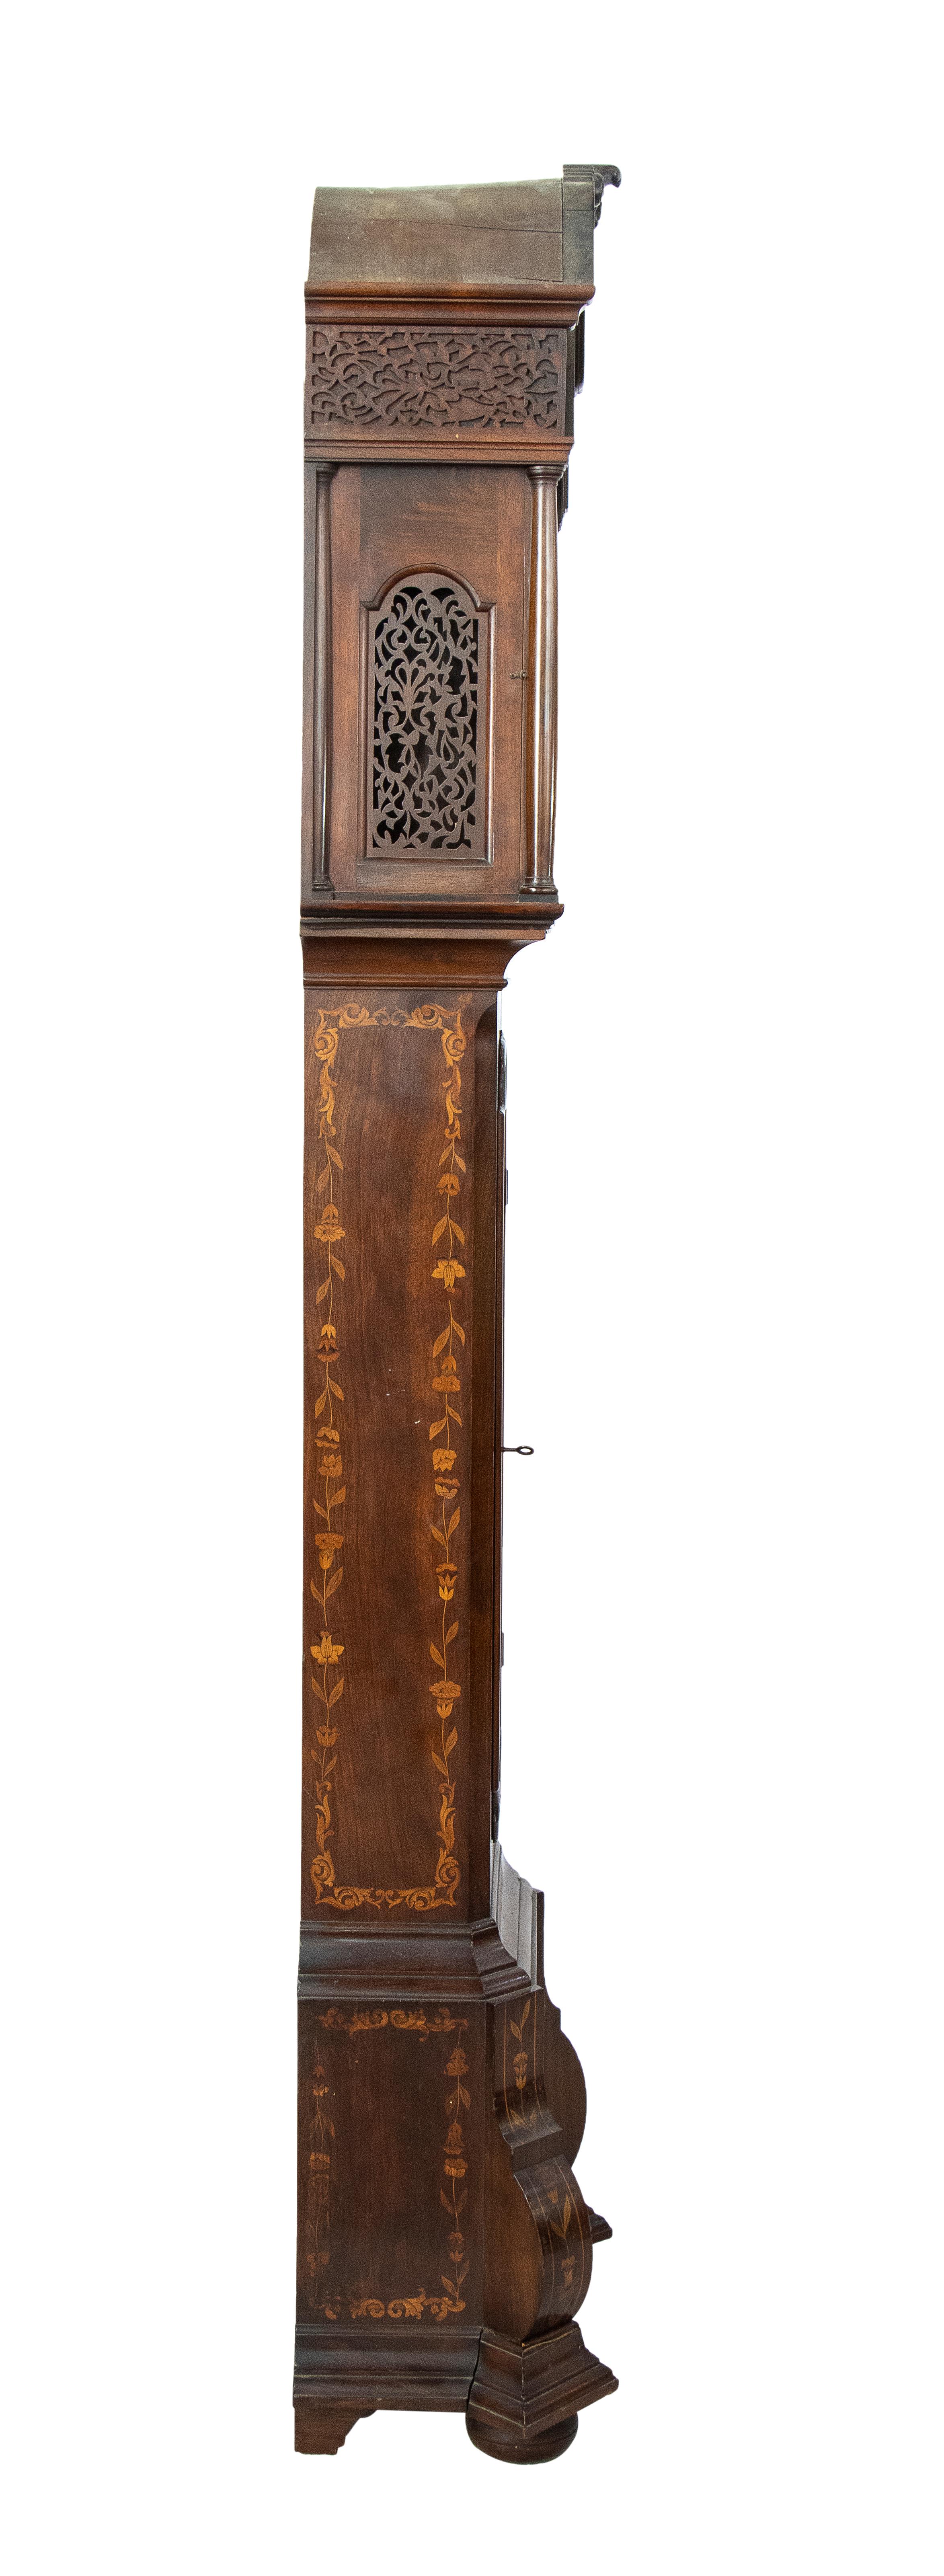 Mid-18th Century 18th Century Louis XV Mahogany Grandfather Clock signed Paulus Bramer 1750